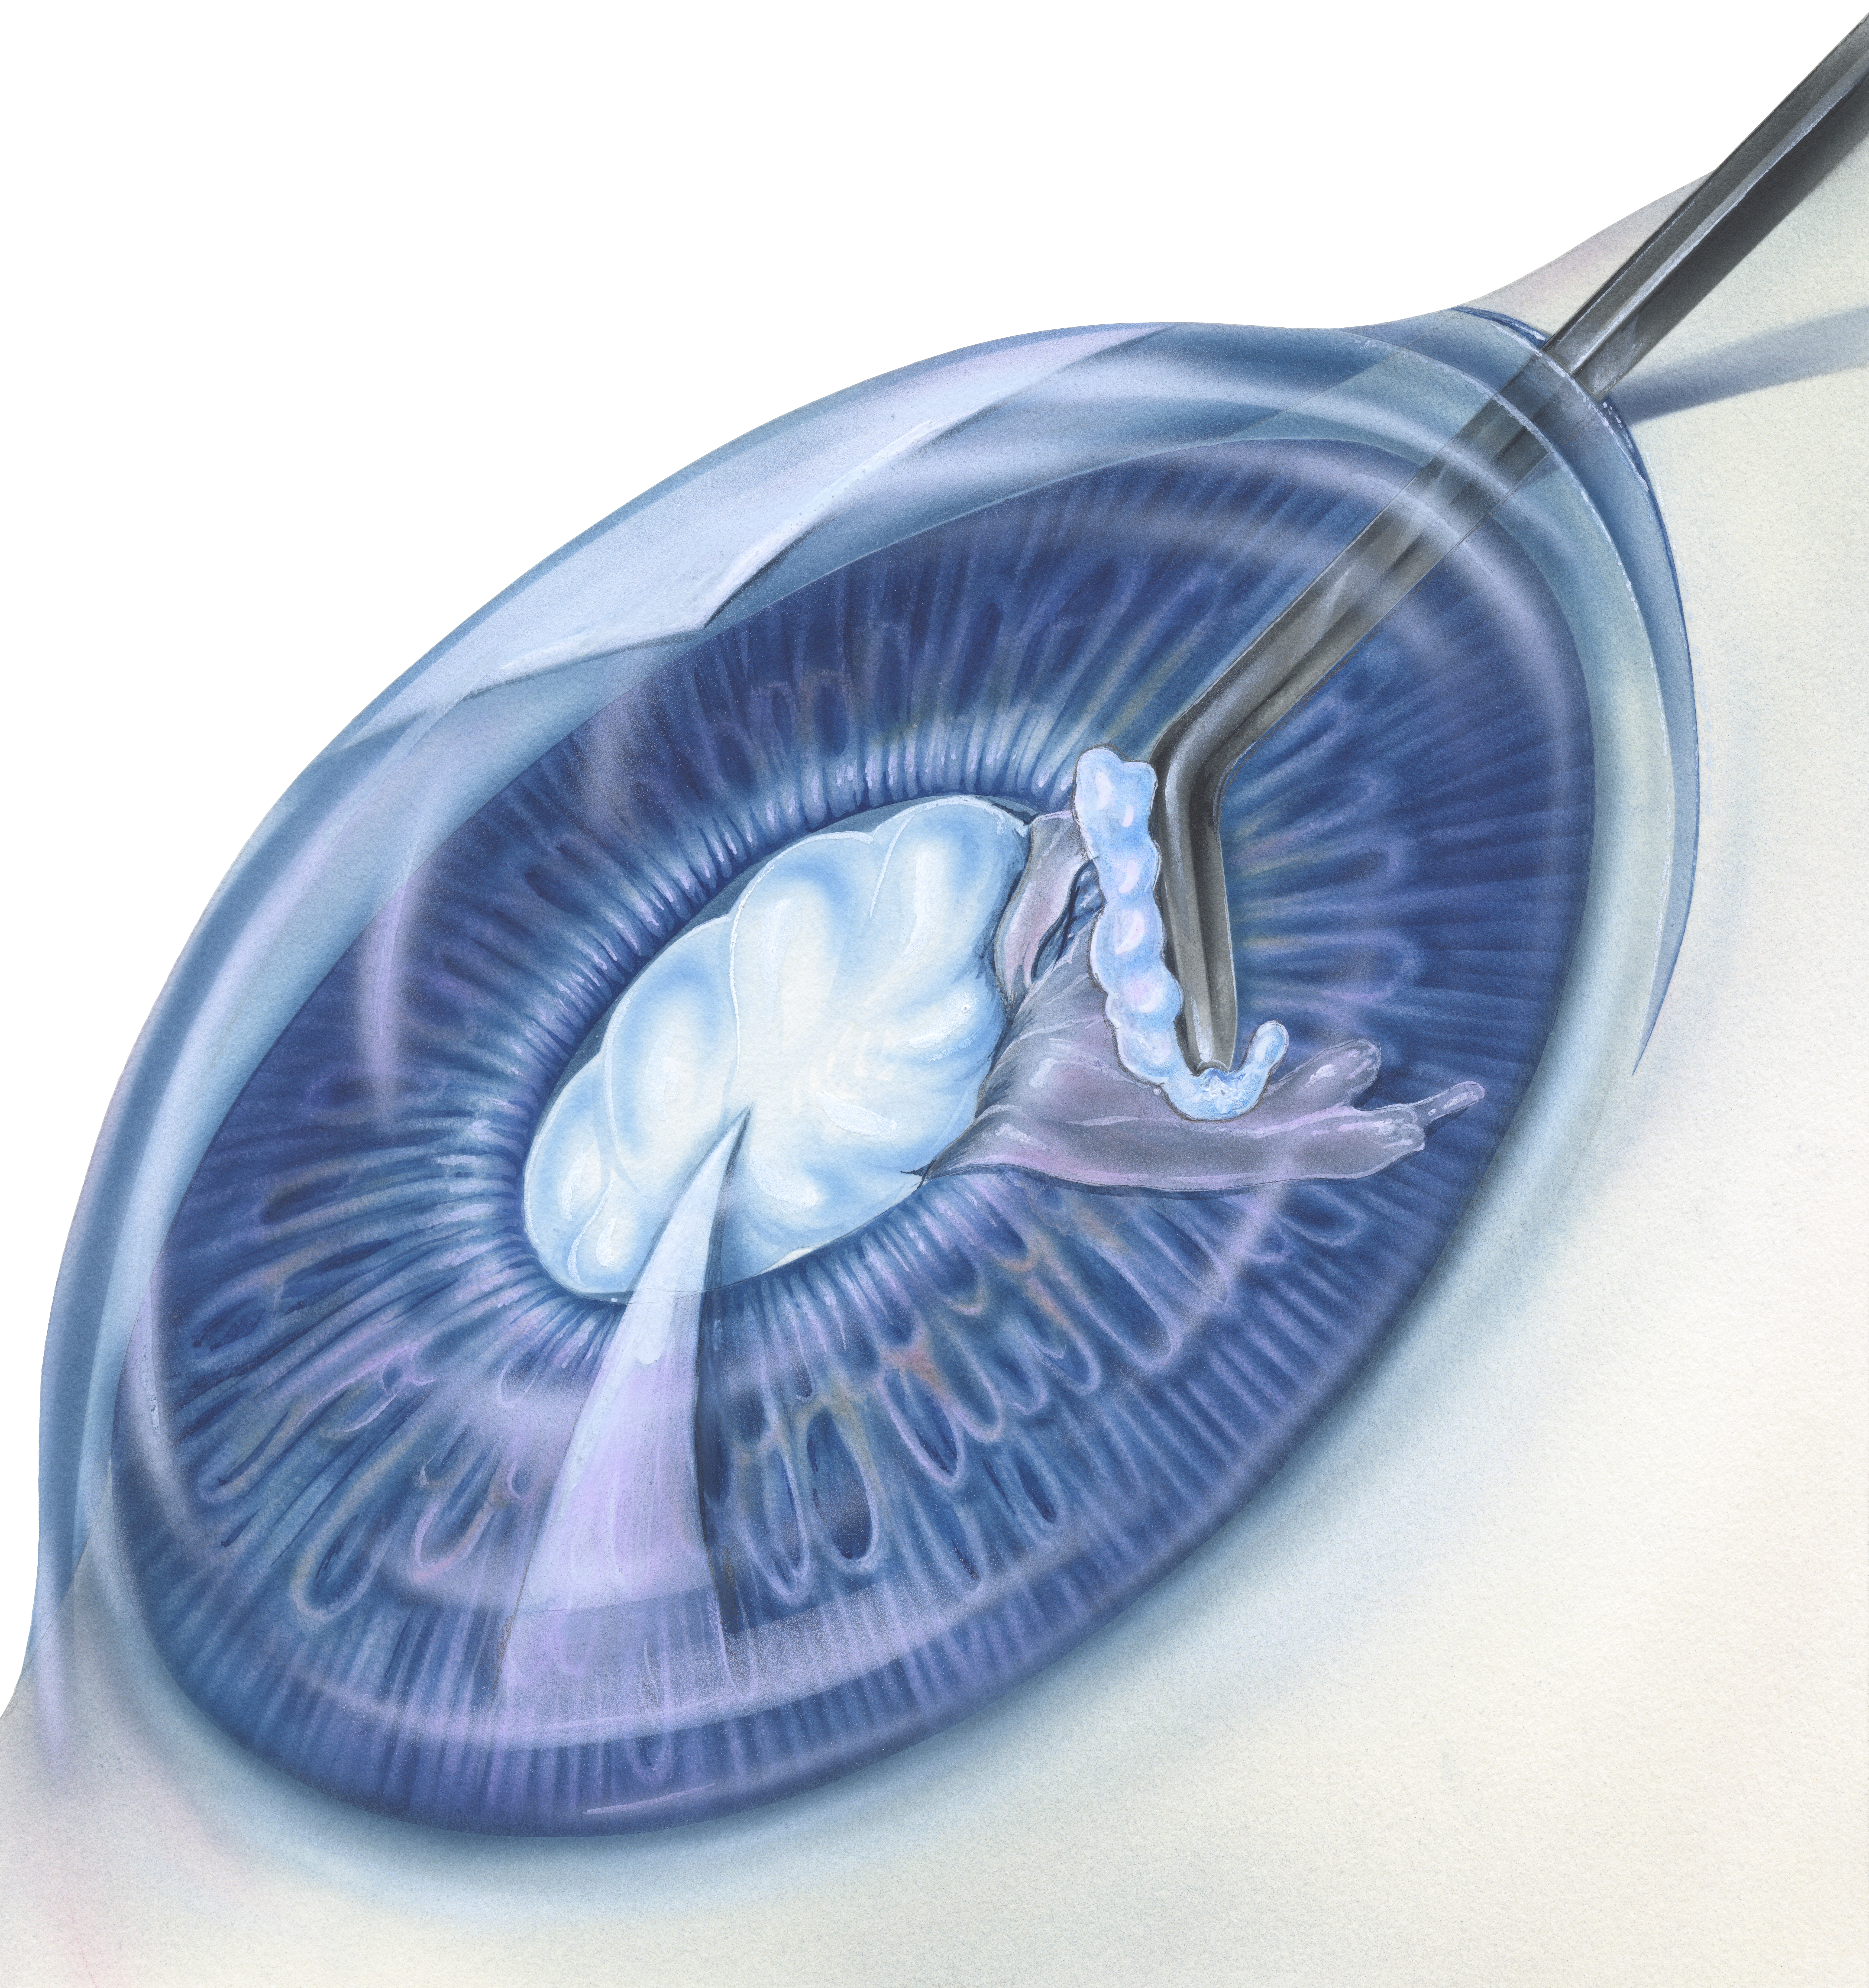 Eye,-,Cataract,Surgery,A,Cataract,Is,An,Eye,Disease